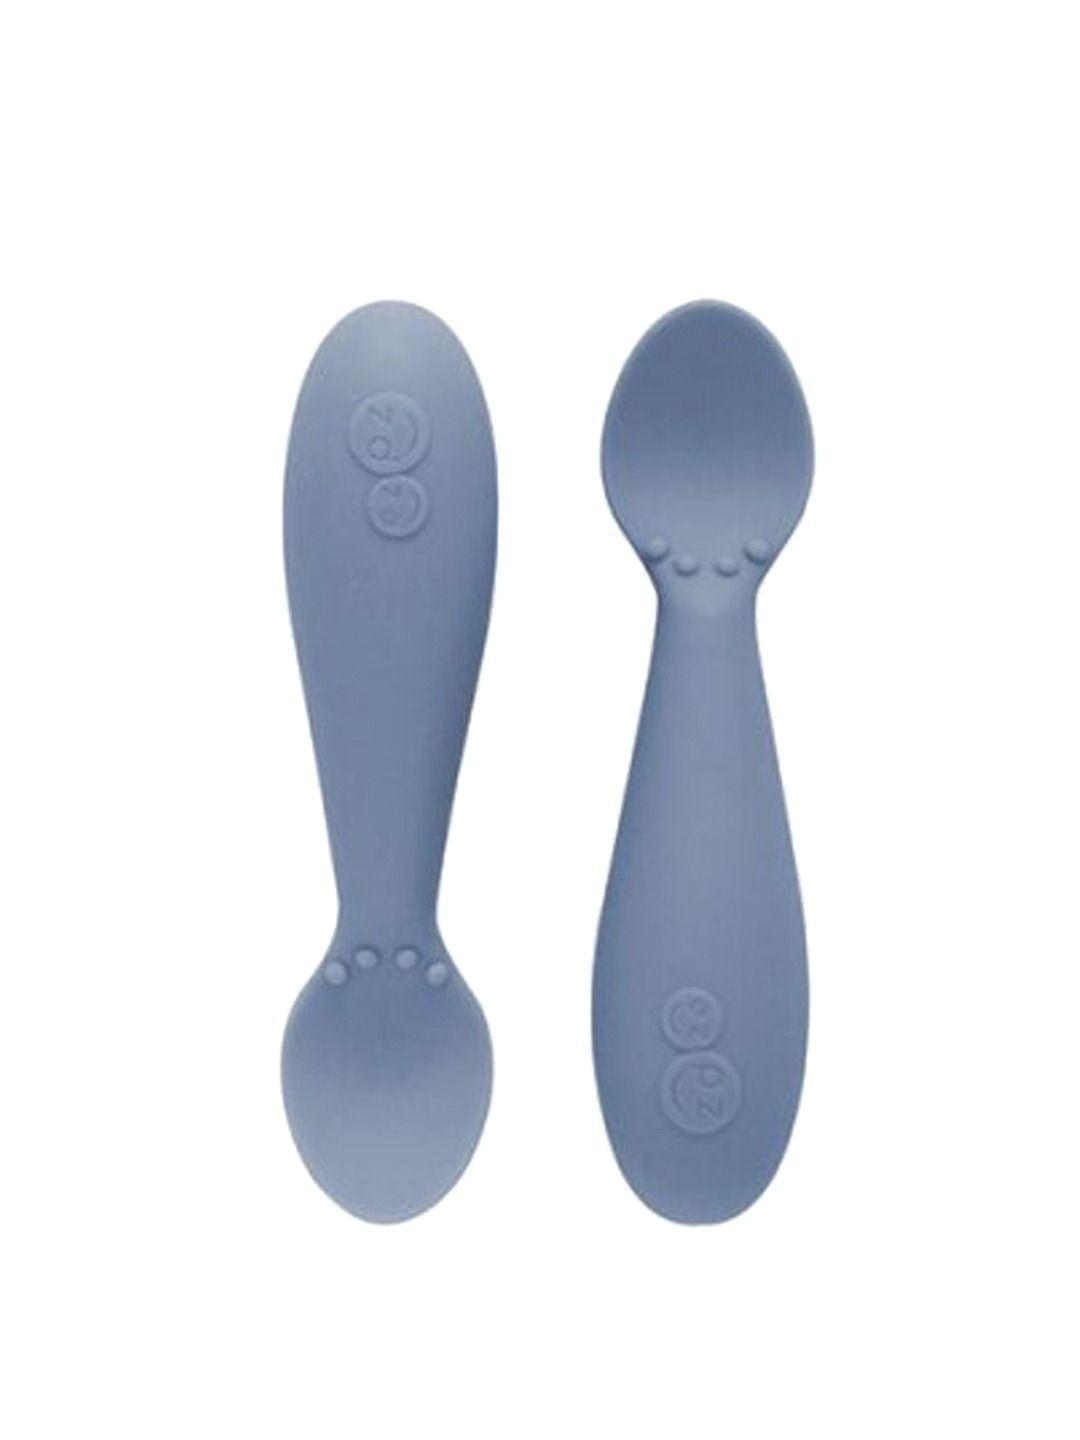 ezpz kids blue fda tiny spoon set- 2 pieces